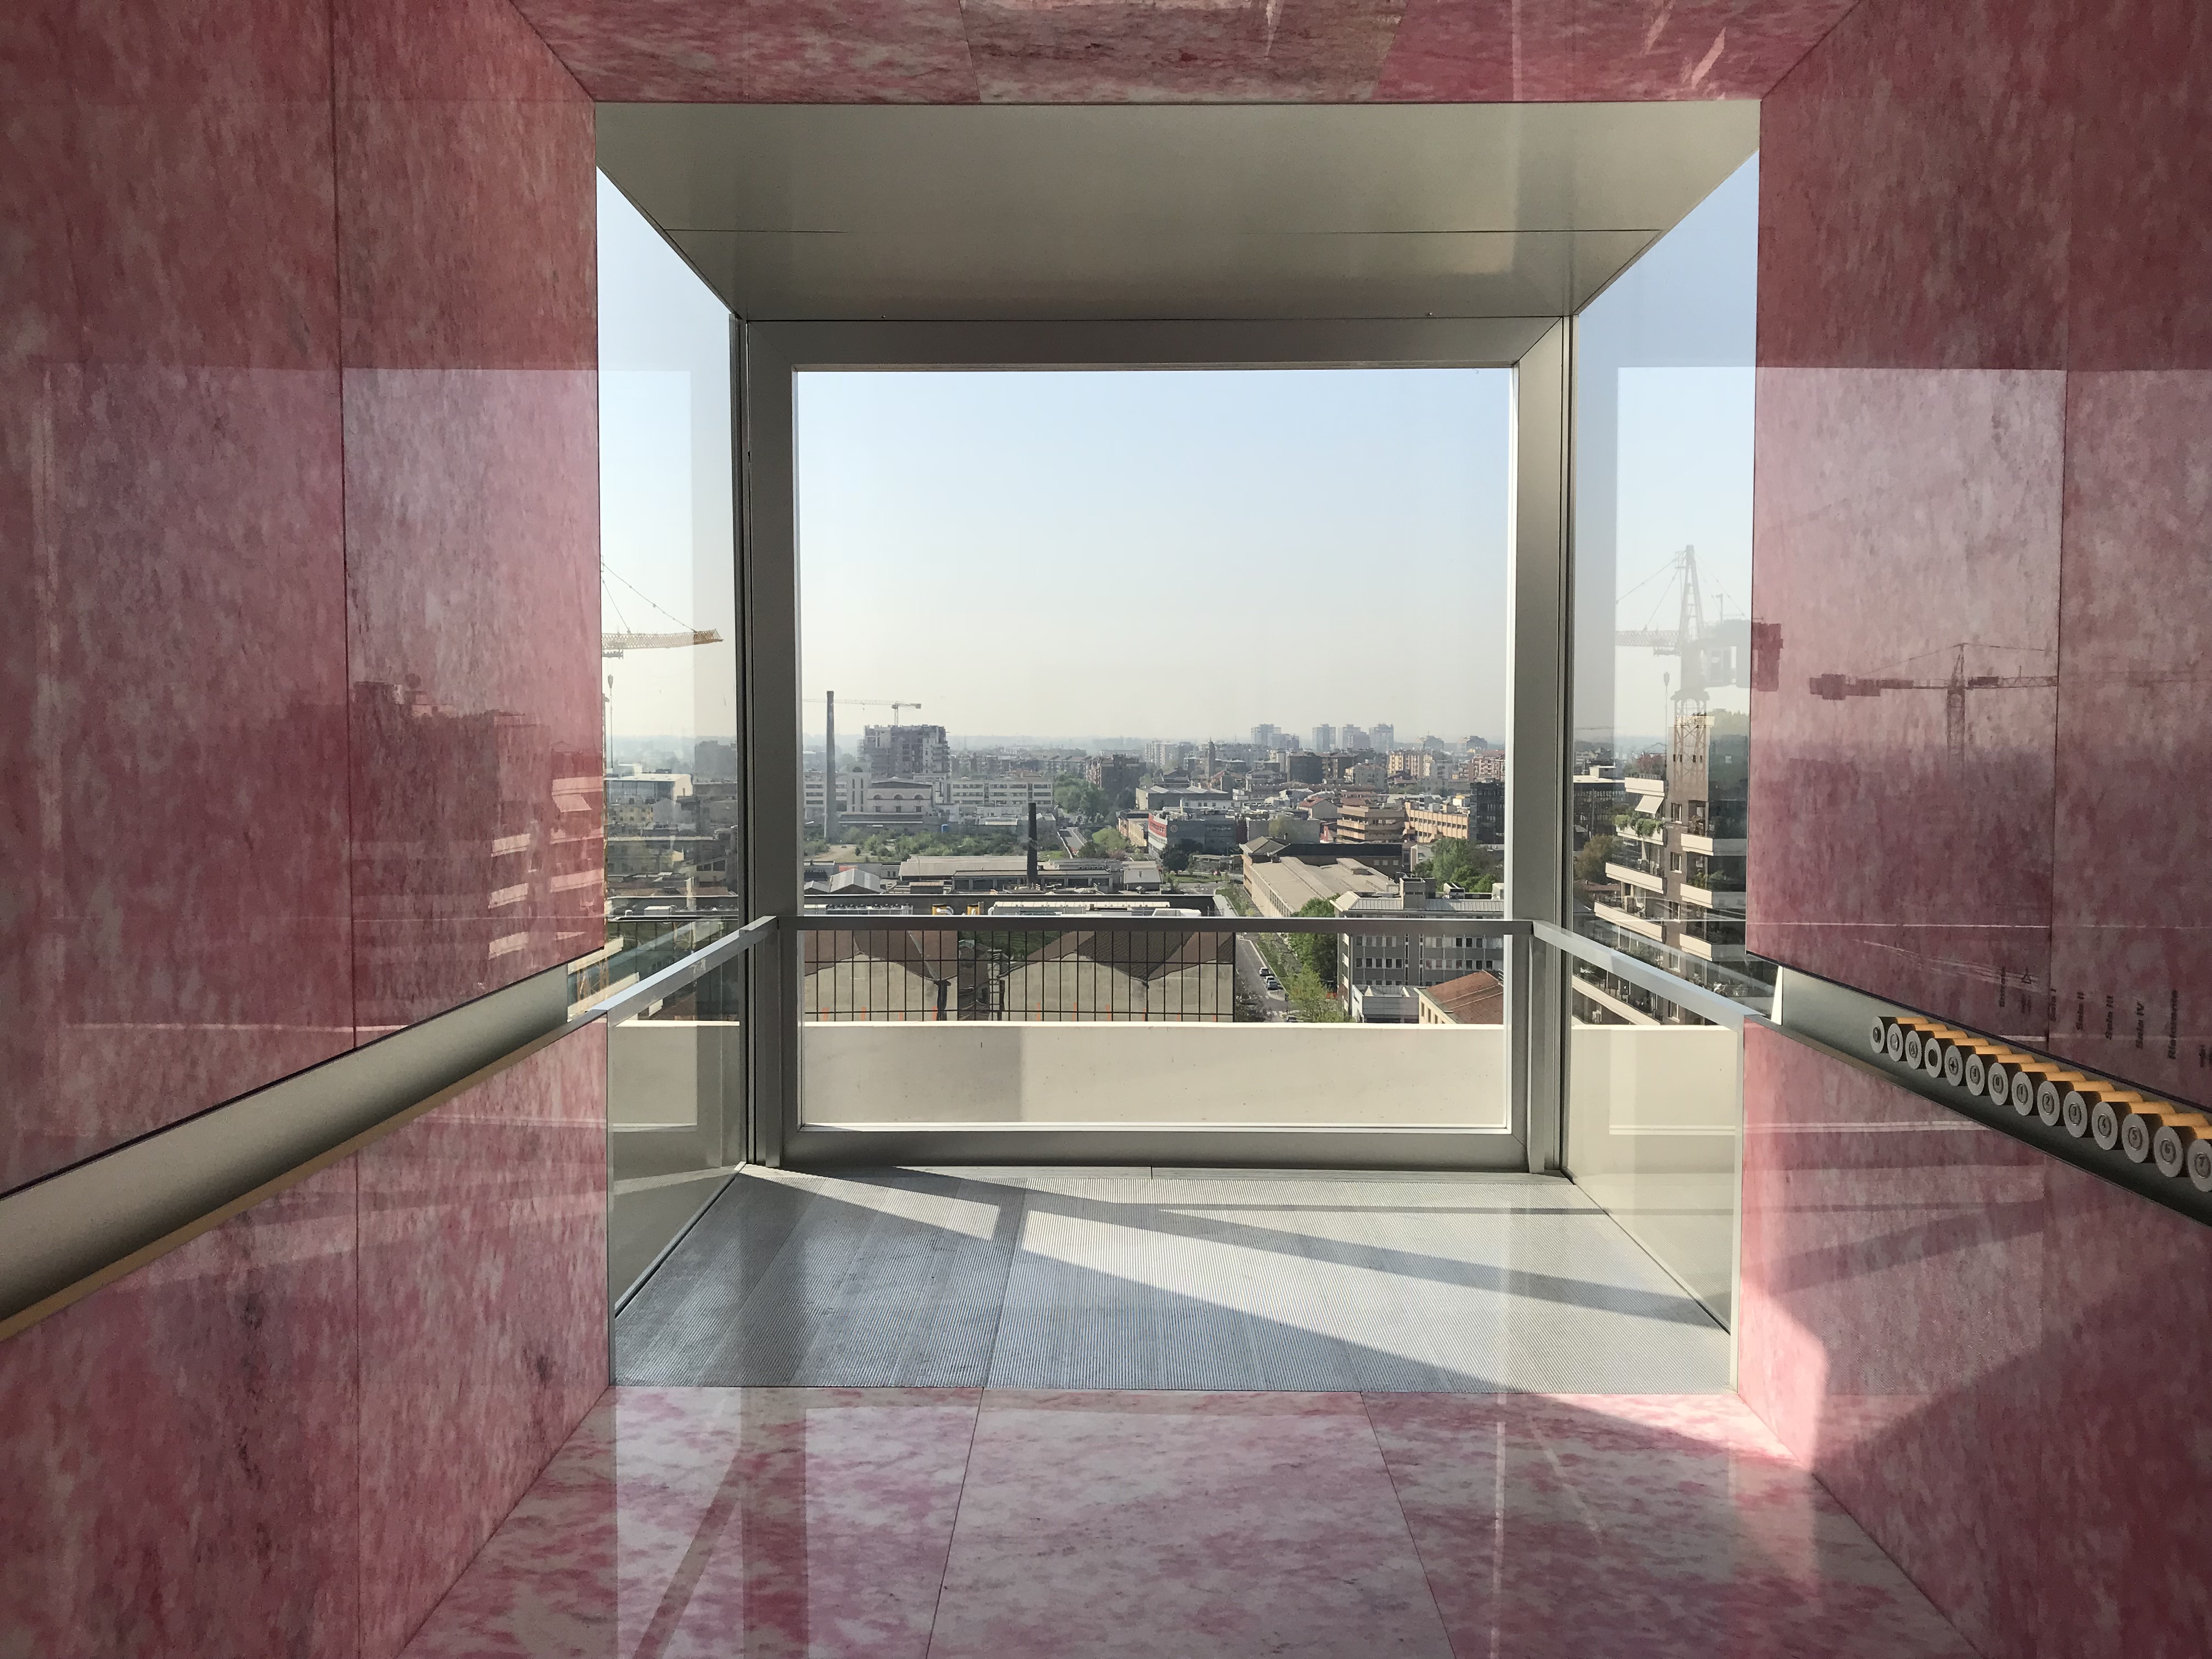 The new Fondazione Prada tower Milan